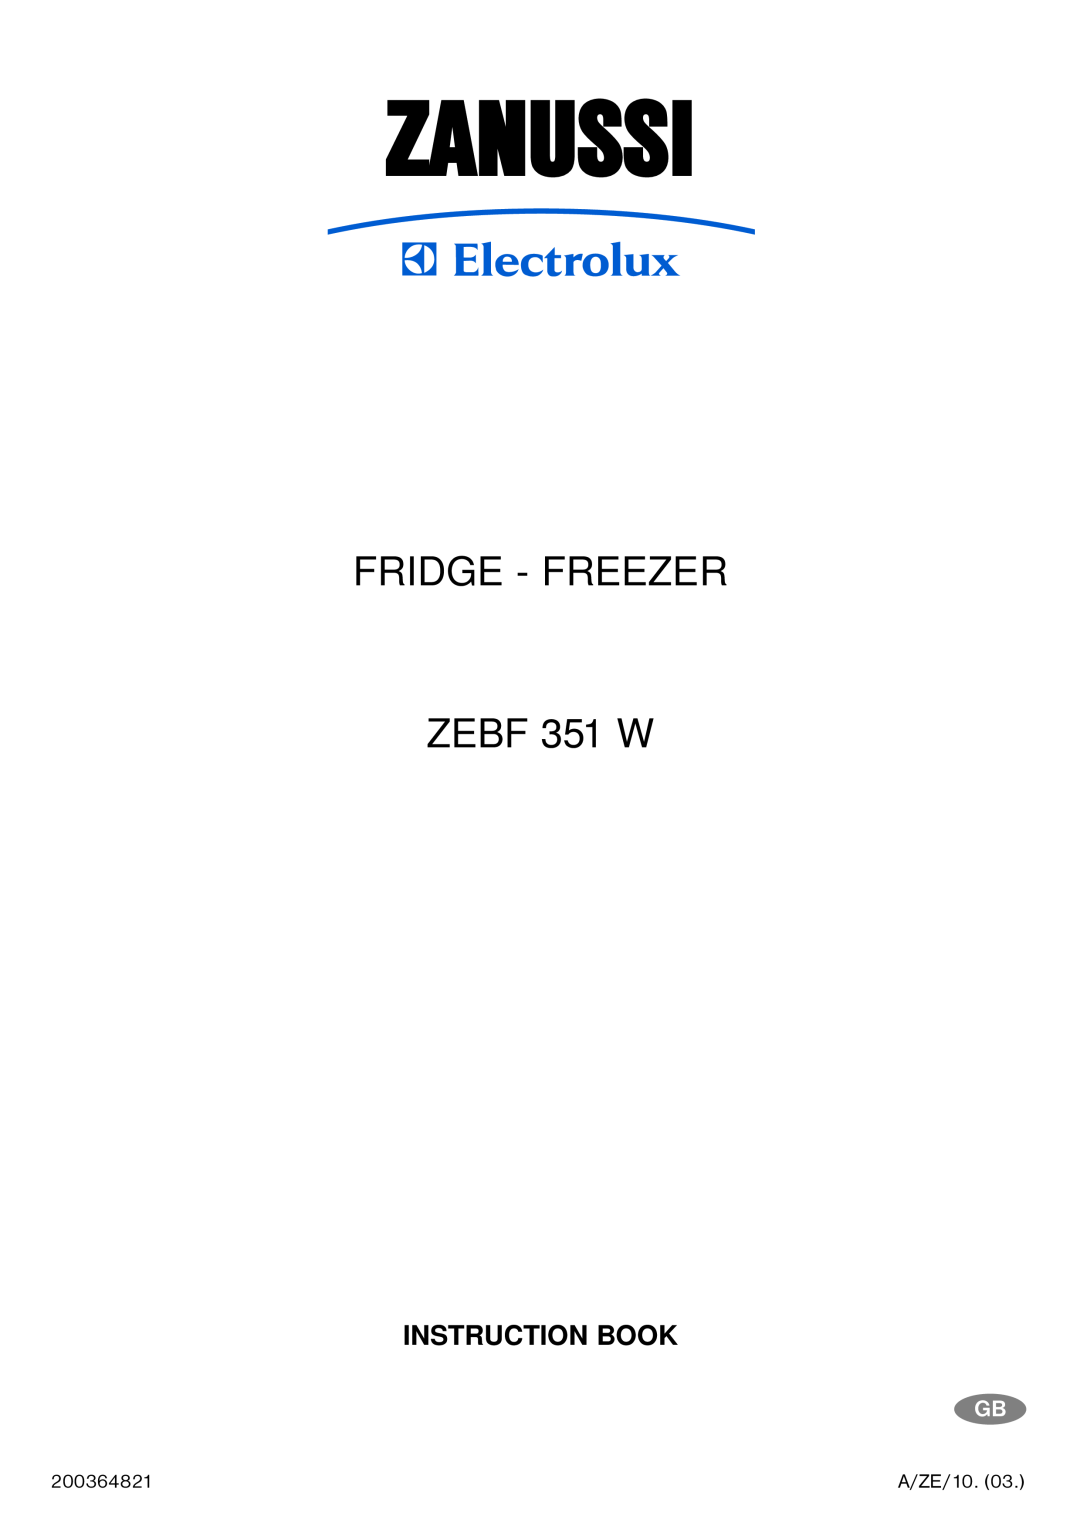 Zanussi manual Zanussi, FRIDGE - FREEZER ZEBF 351 W, Instruction Book 